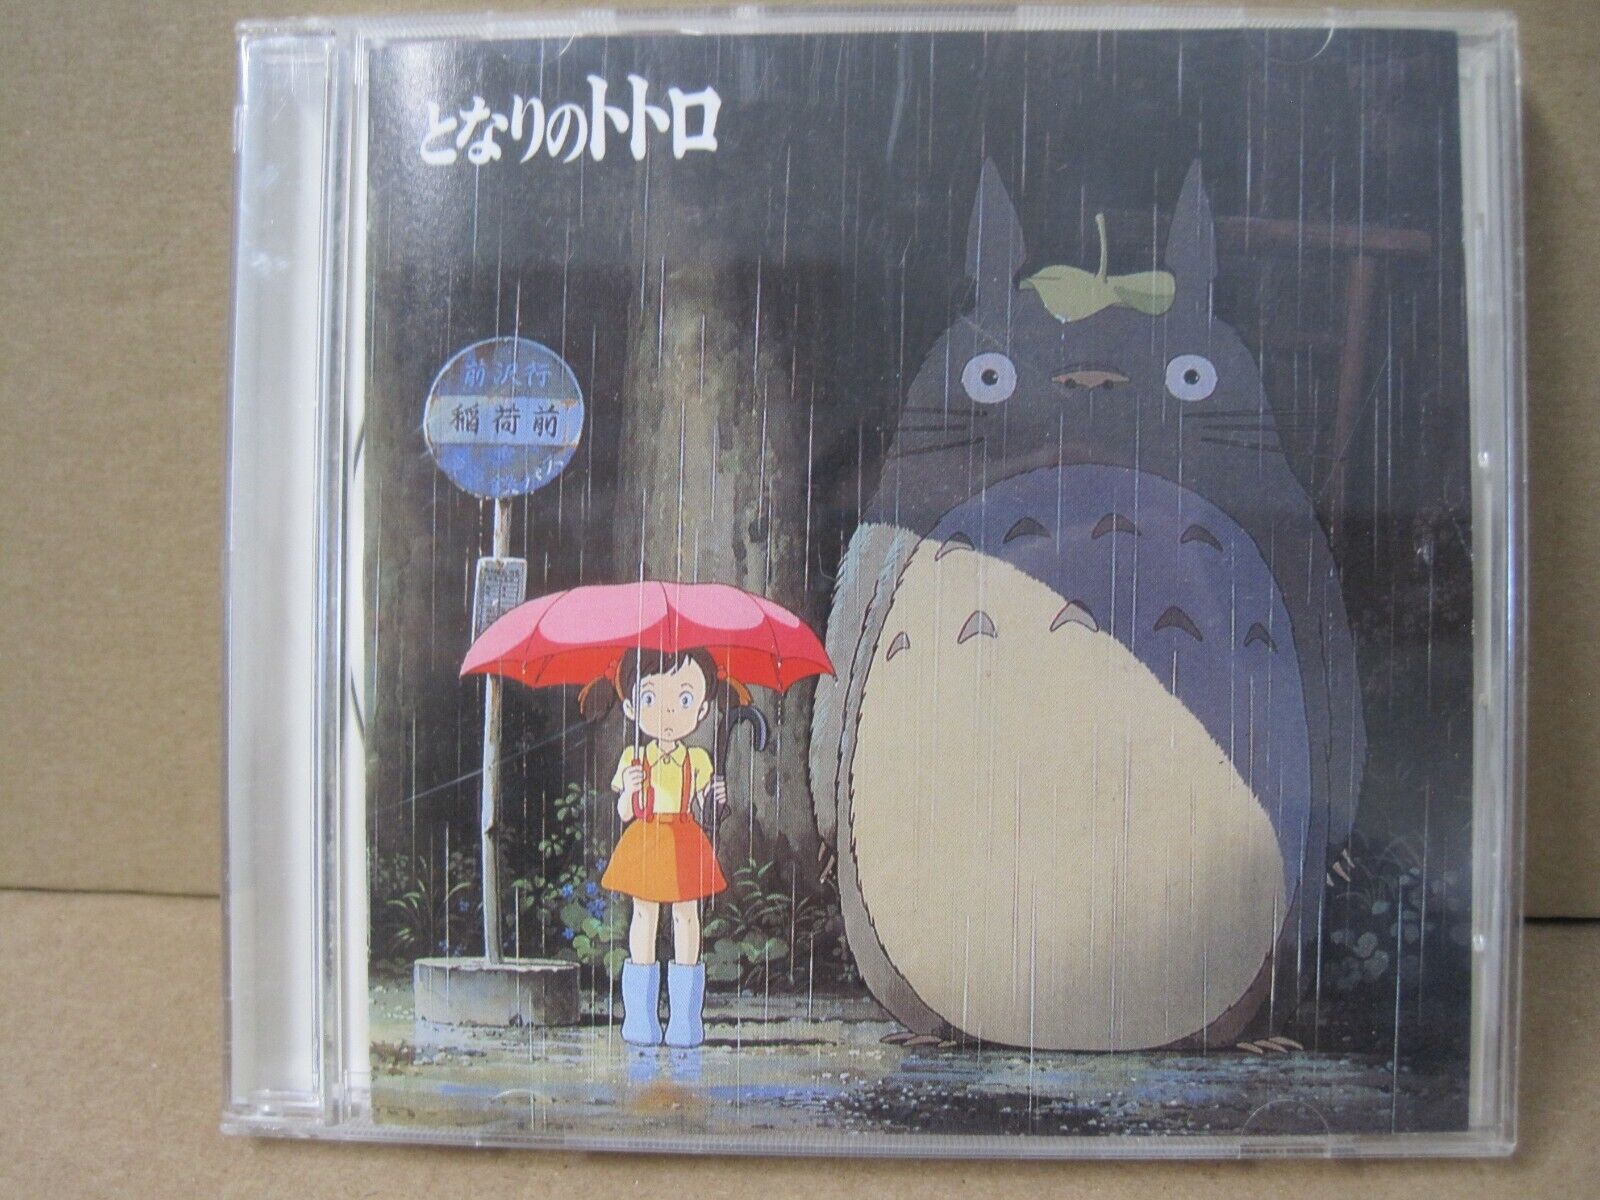 Tonari no Totoro ANIME SOUNDTRACK CD Studio Ghibli My Neighbor Totoro  image son